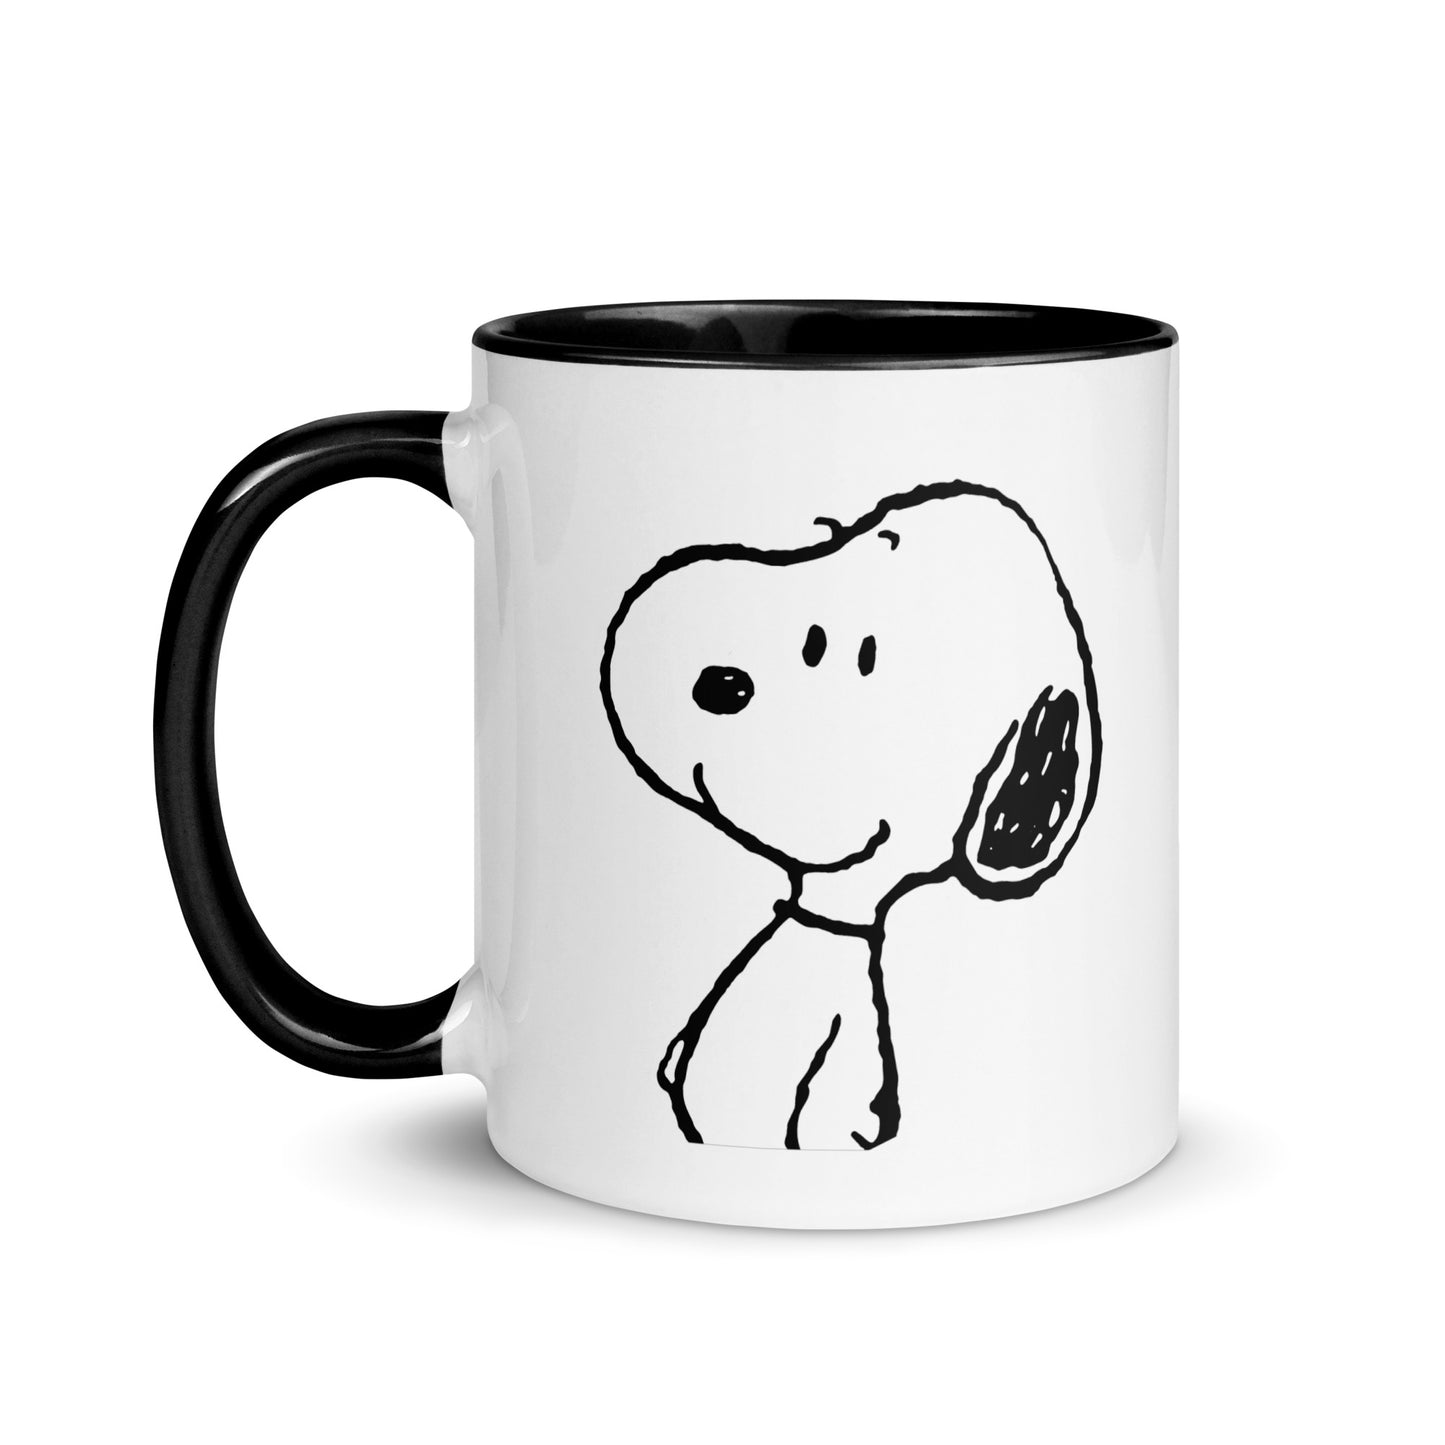 Snoopy Two Tone Mug